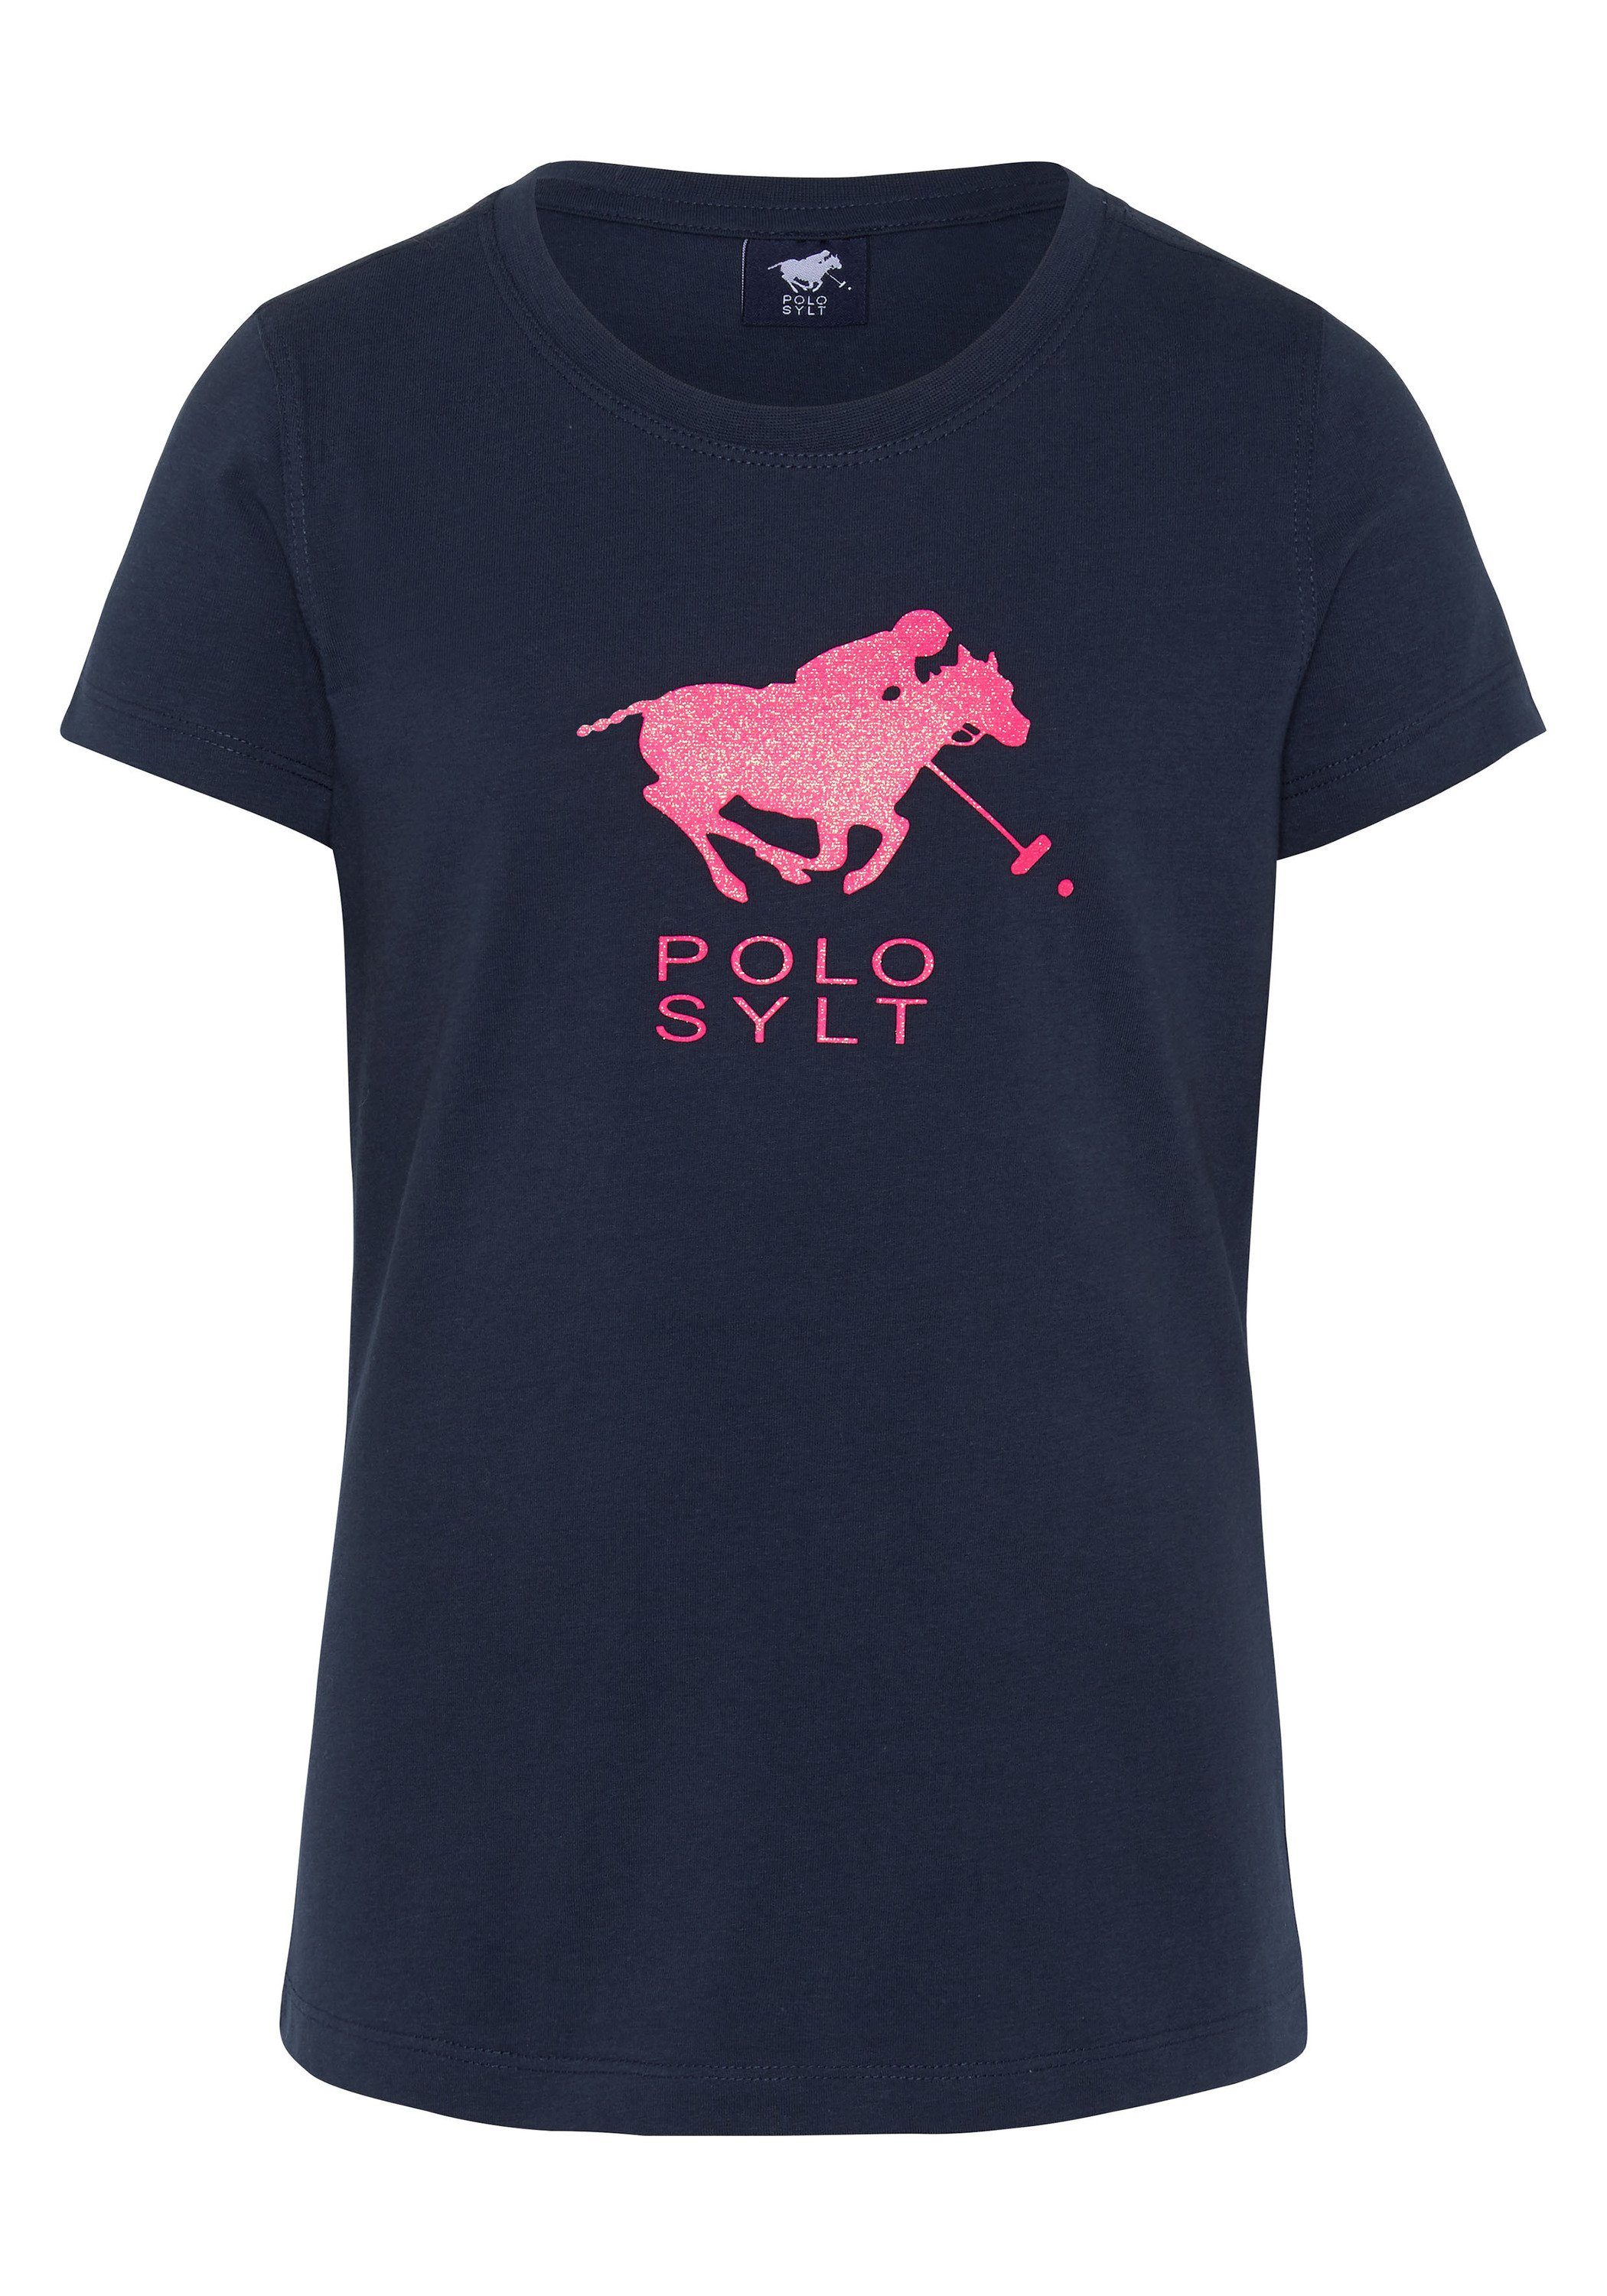 Polo Sylt Print-Shirt mit Glitzer-Logo Total Eclipse